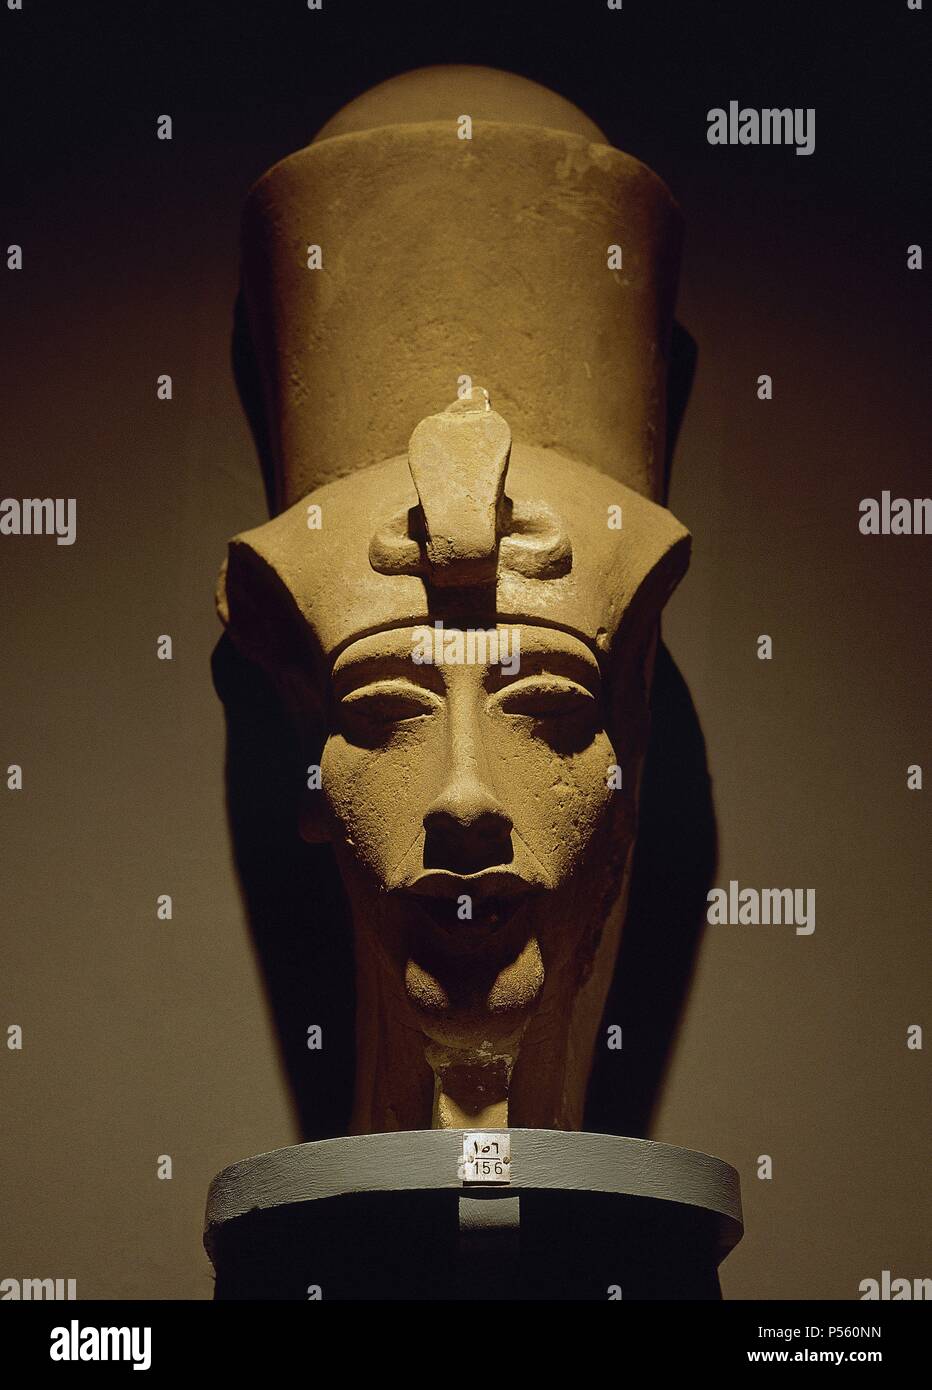 ARTE EGIPCIO. CABEZA DE AMENOFIS IV (AMENHOTEP) o AKHENATON, faraón de la dinastía XVIII (h.1405-1367 a.C.). Museo de Luxor. Egipto. Stock Photo